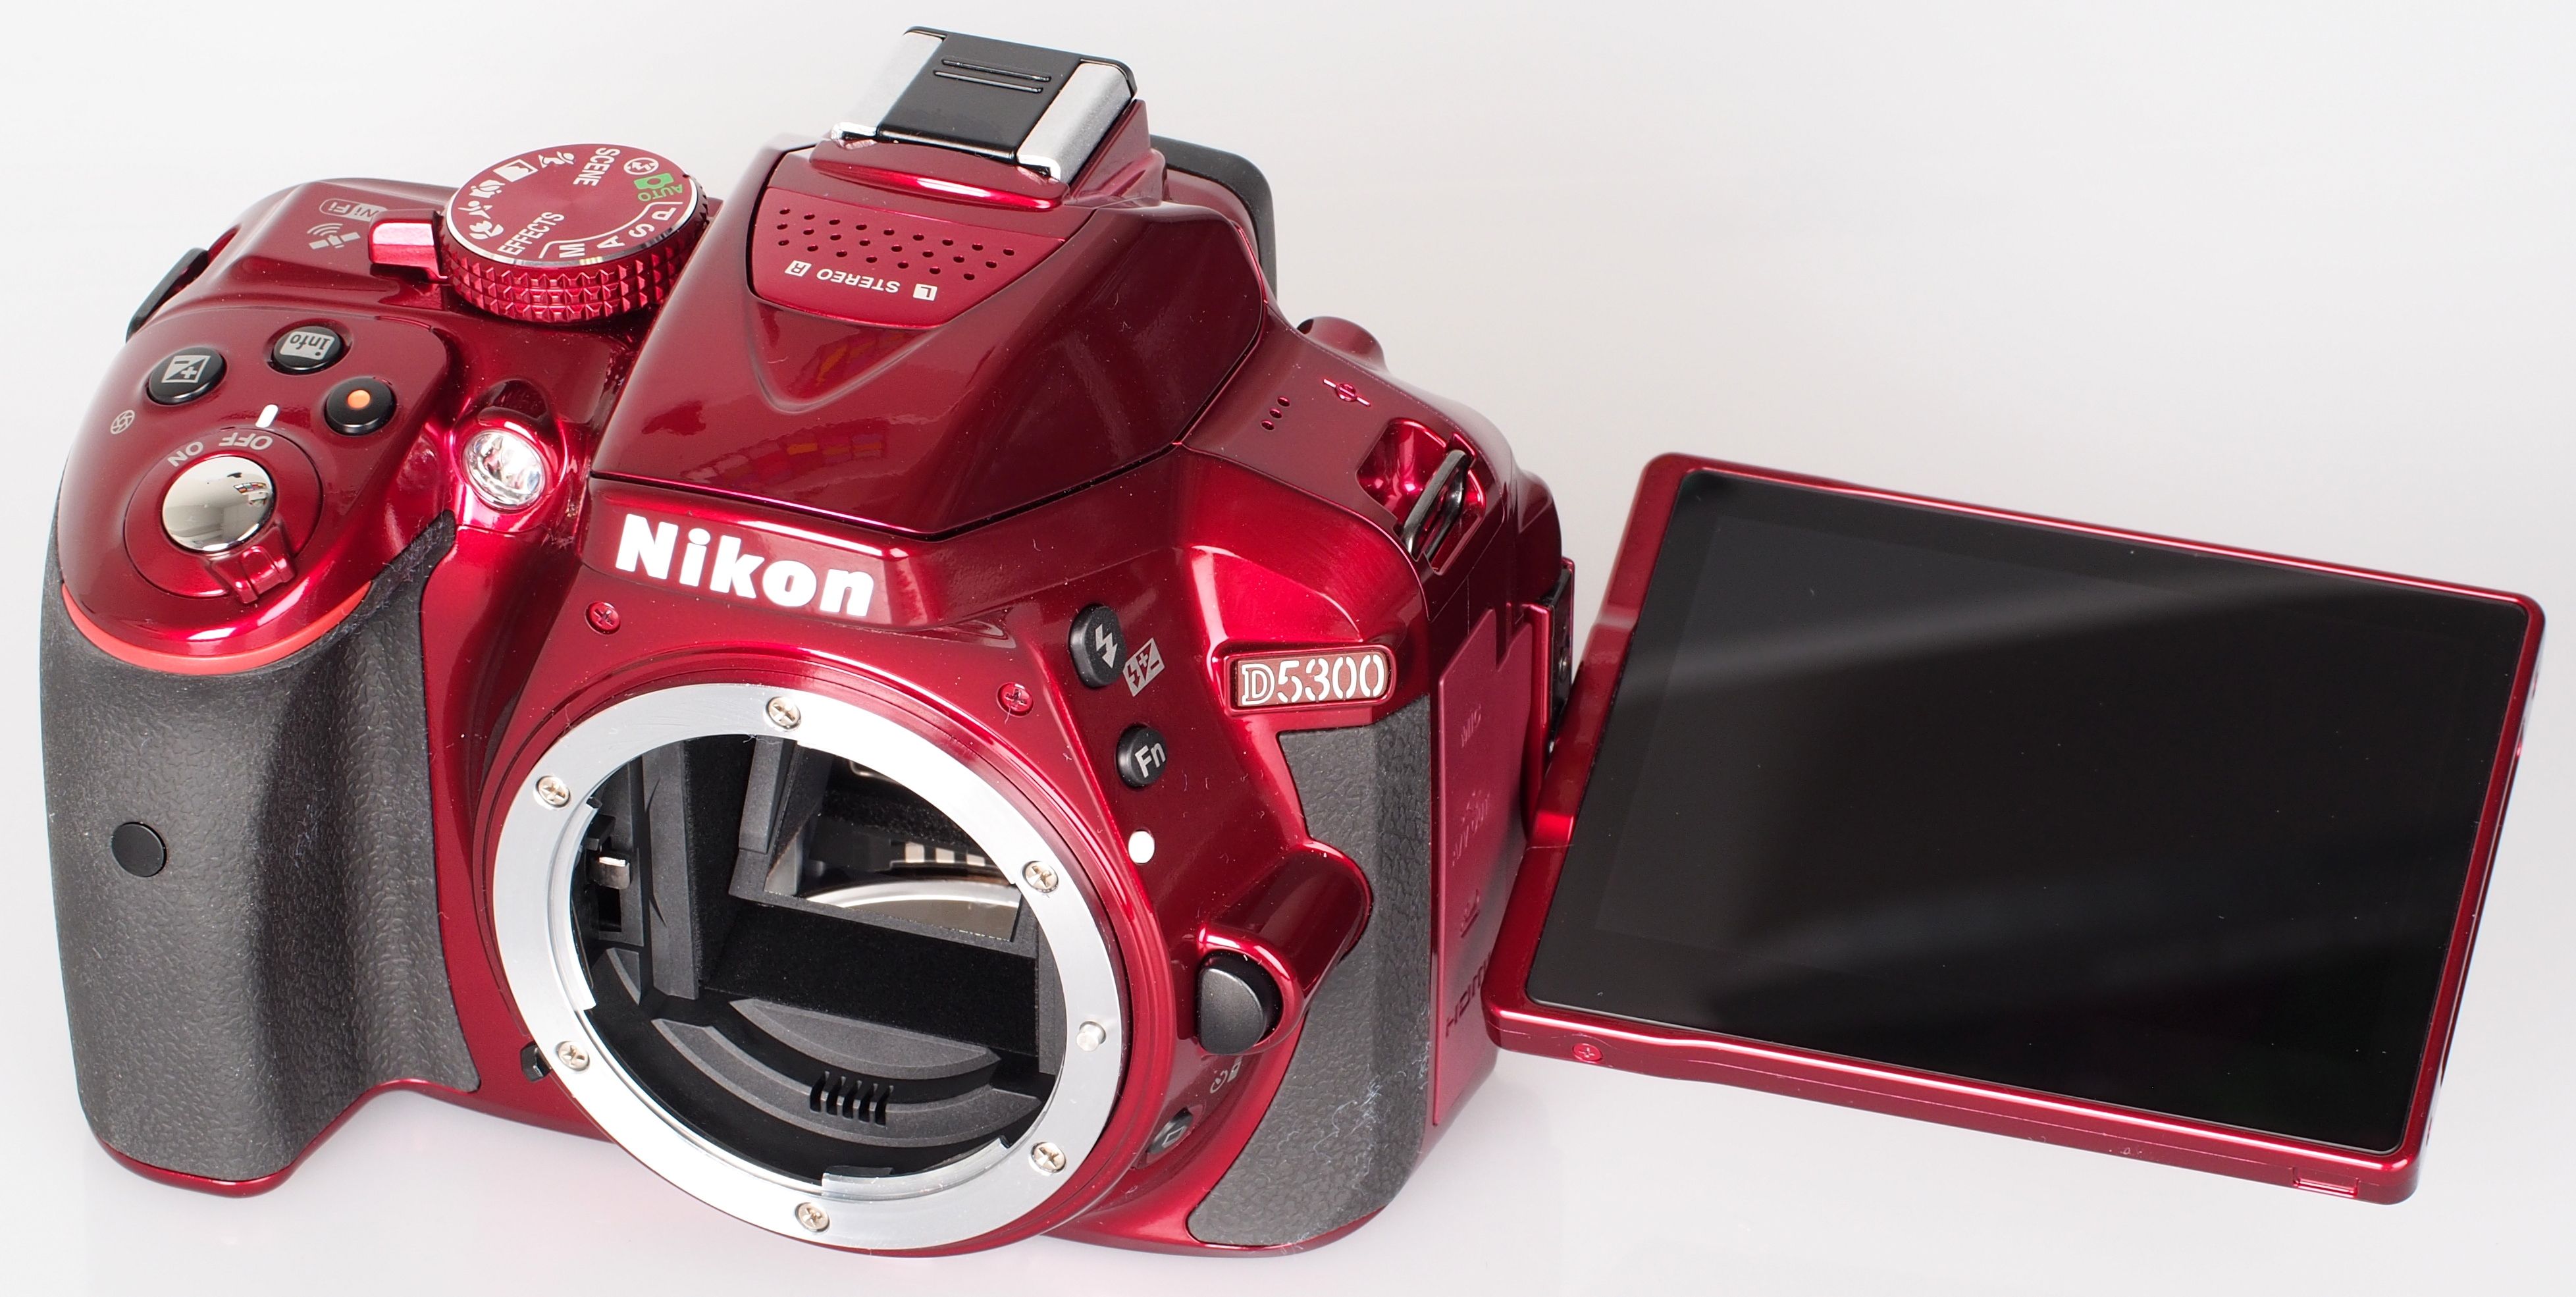 Nikon D5300 Digital SLR Review